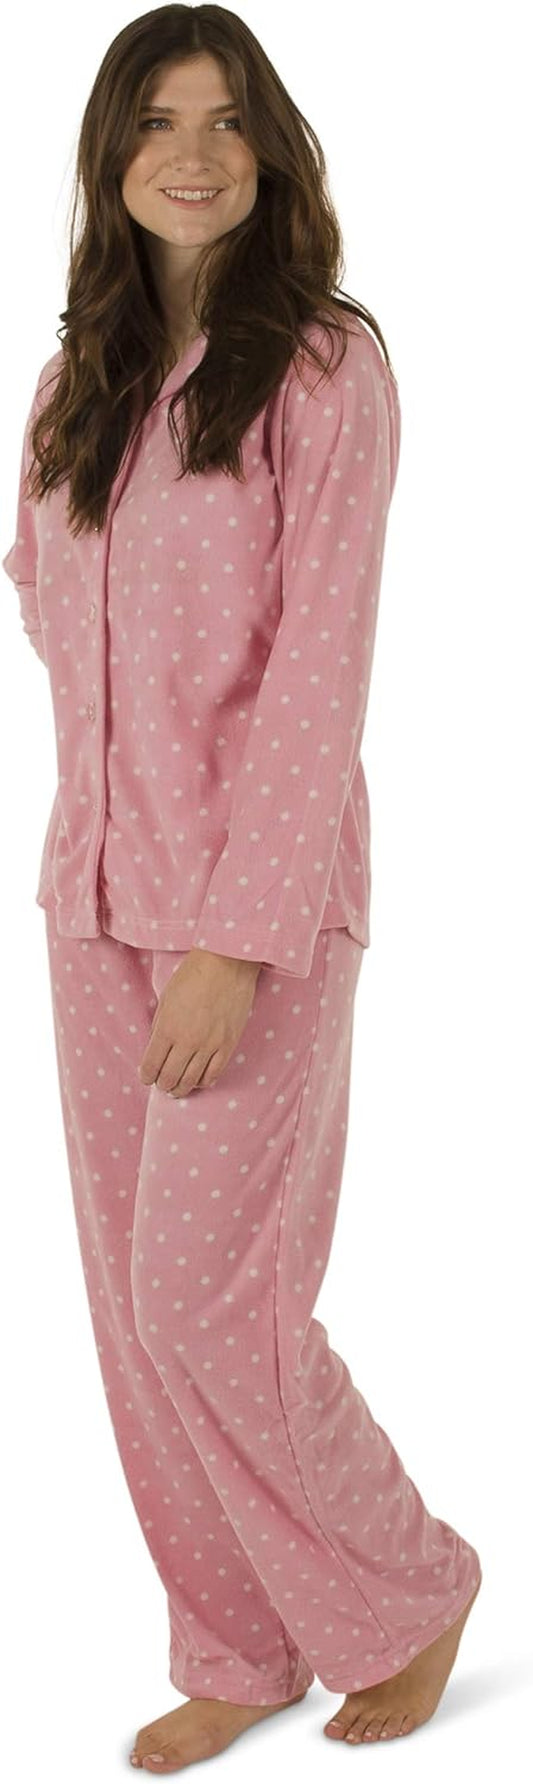 Women'S Warm and Cozy Plush Fleece Winter Pajama Set Teen and Girls